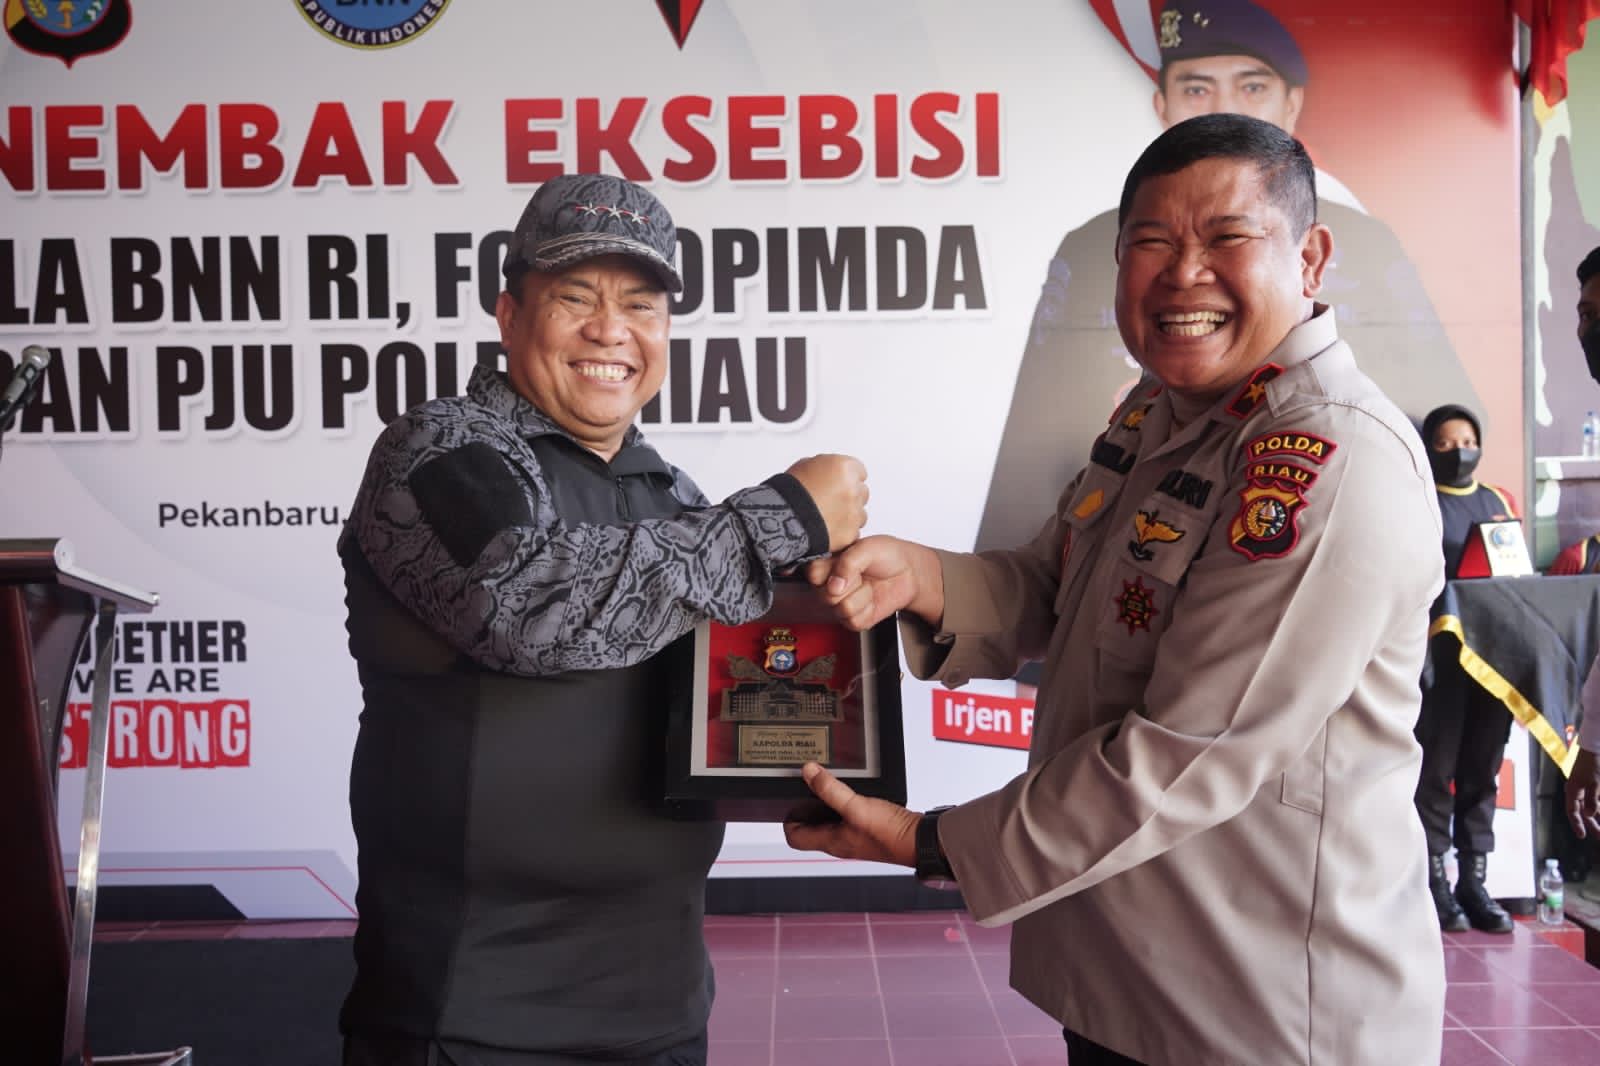 Kepala BNN RI Komjen Petrus Golose Sempatkan Latihan Menembak di Mako Brimob Saat Kunker ke Riau